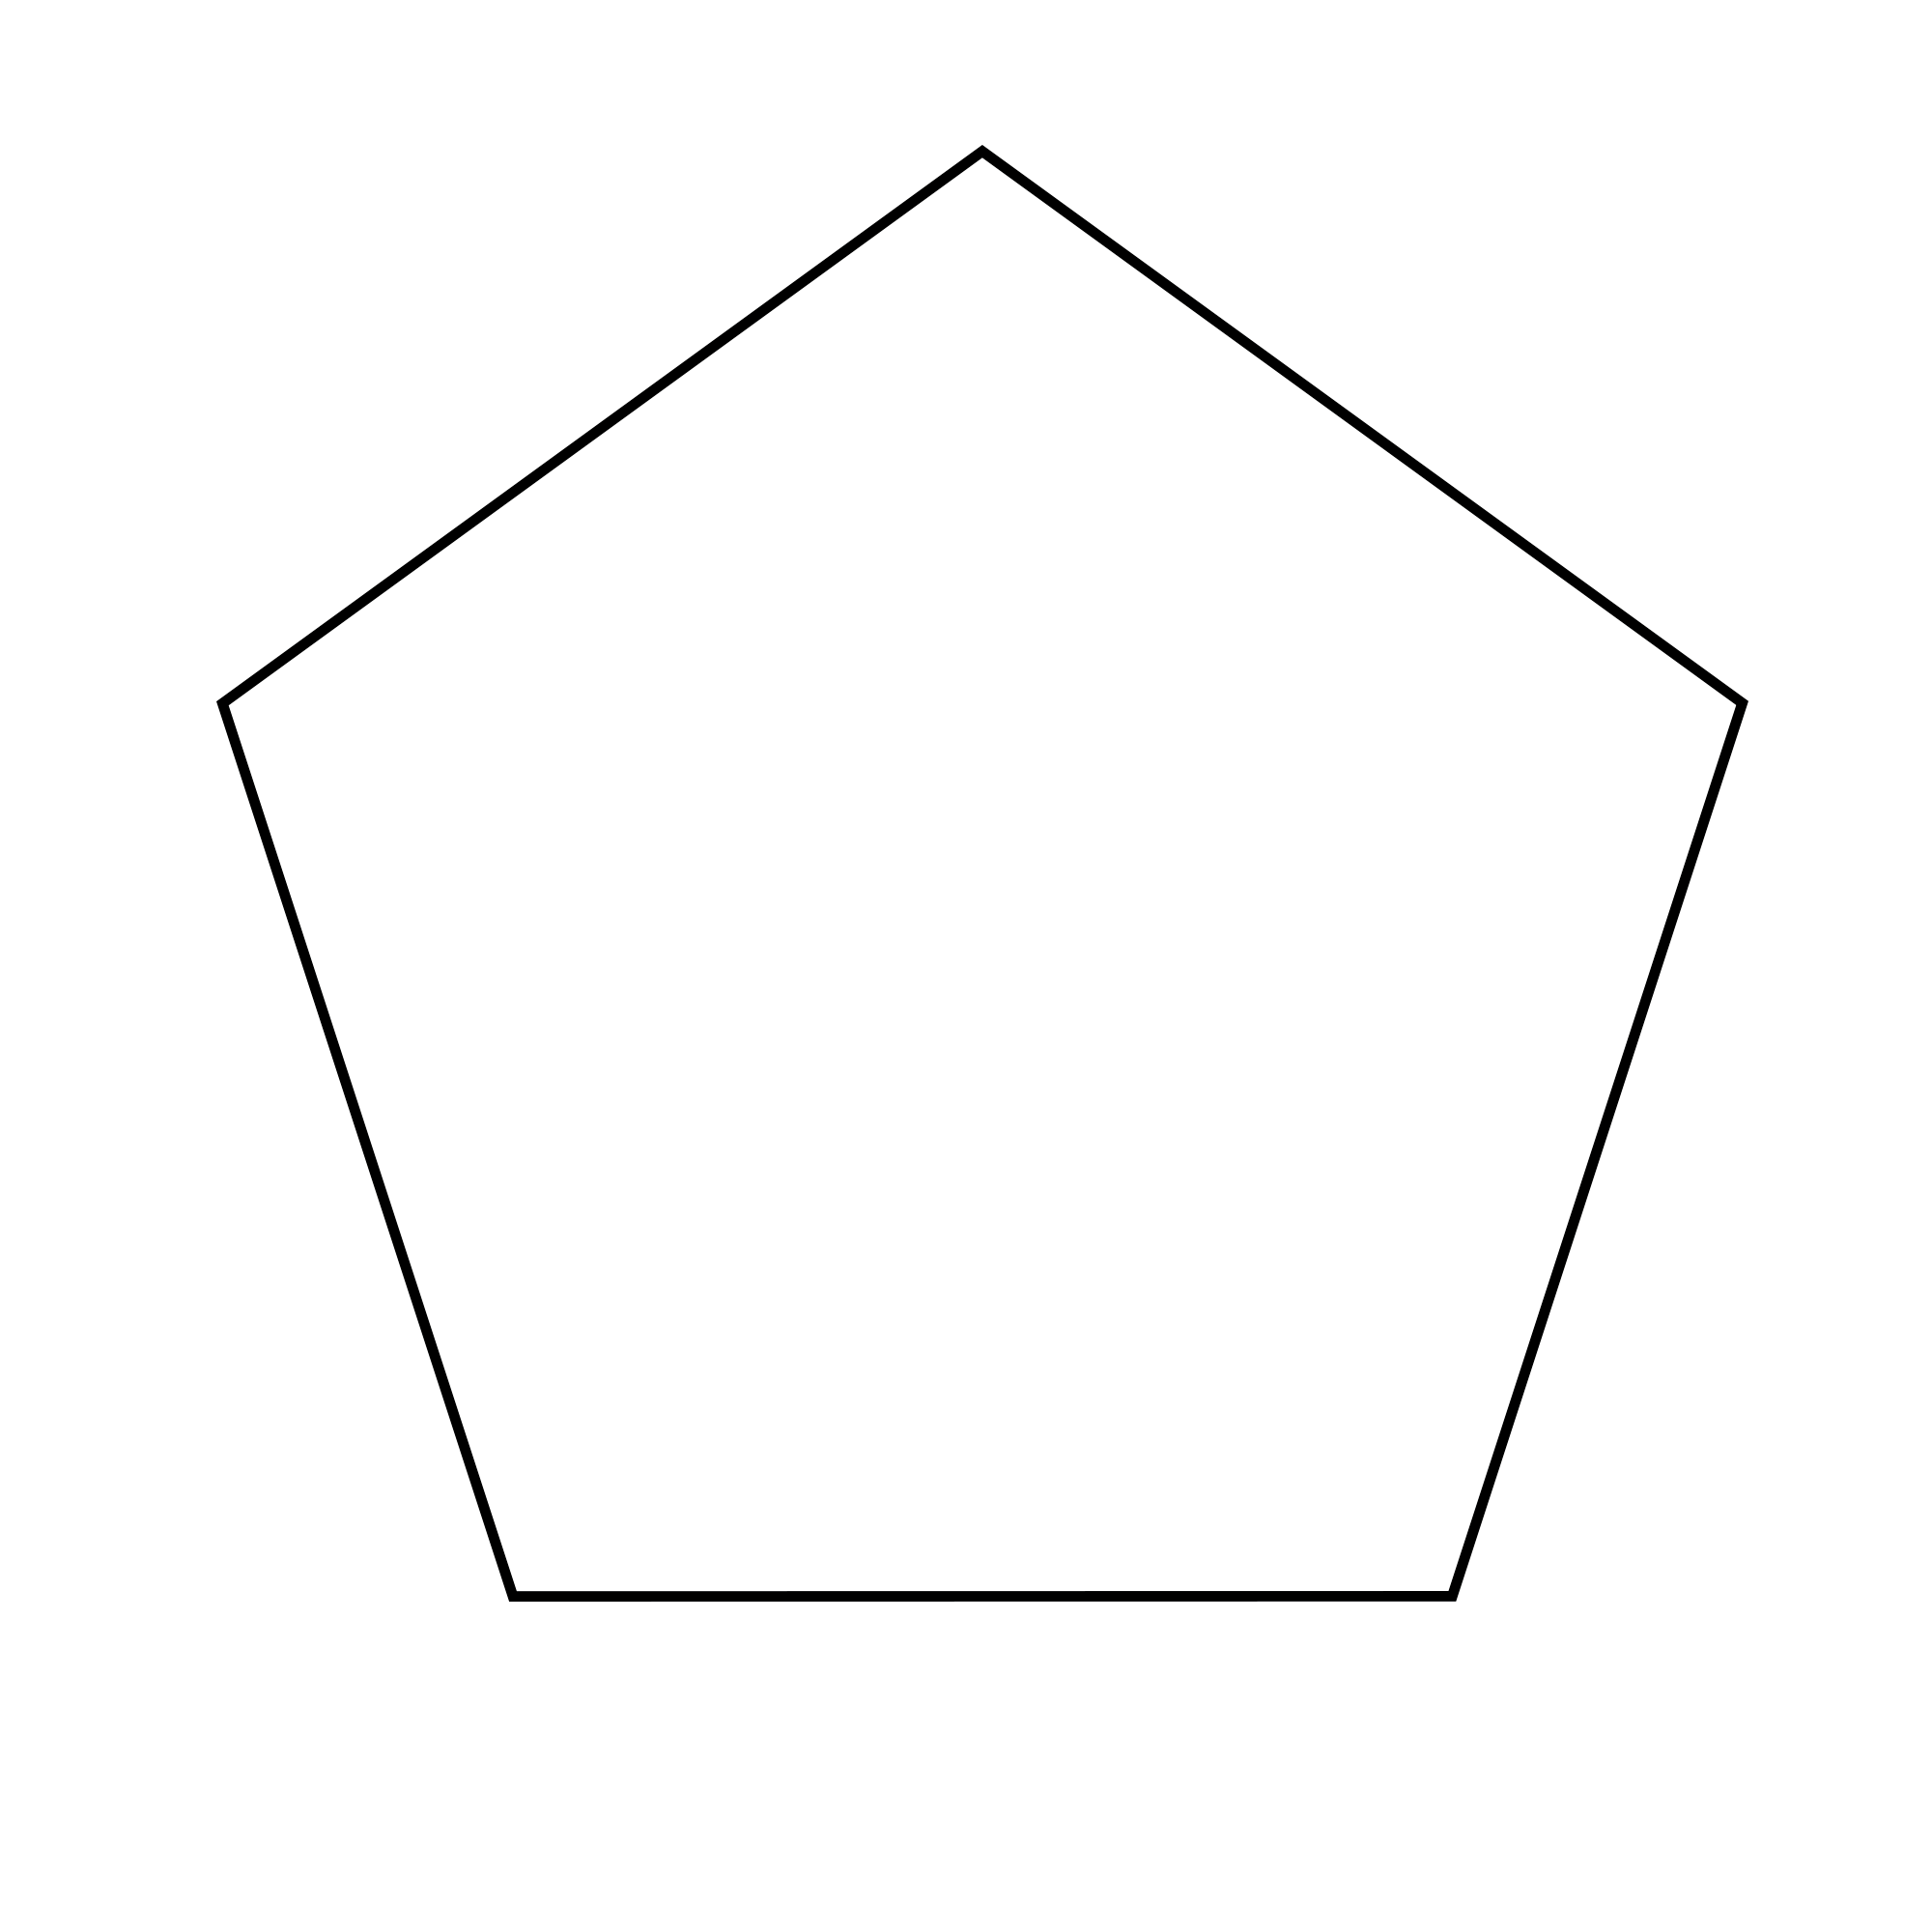 Figure geometriche - Figura geometrica piana - Pentagono poligono a 5 lati